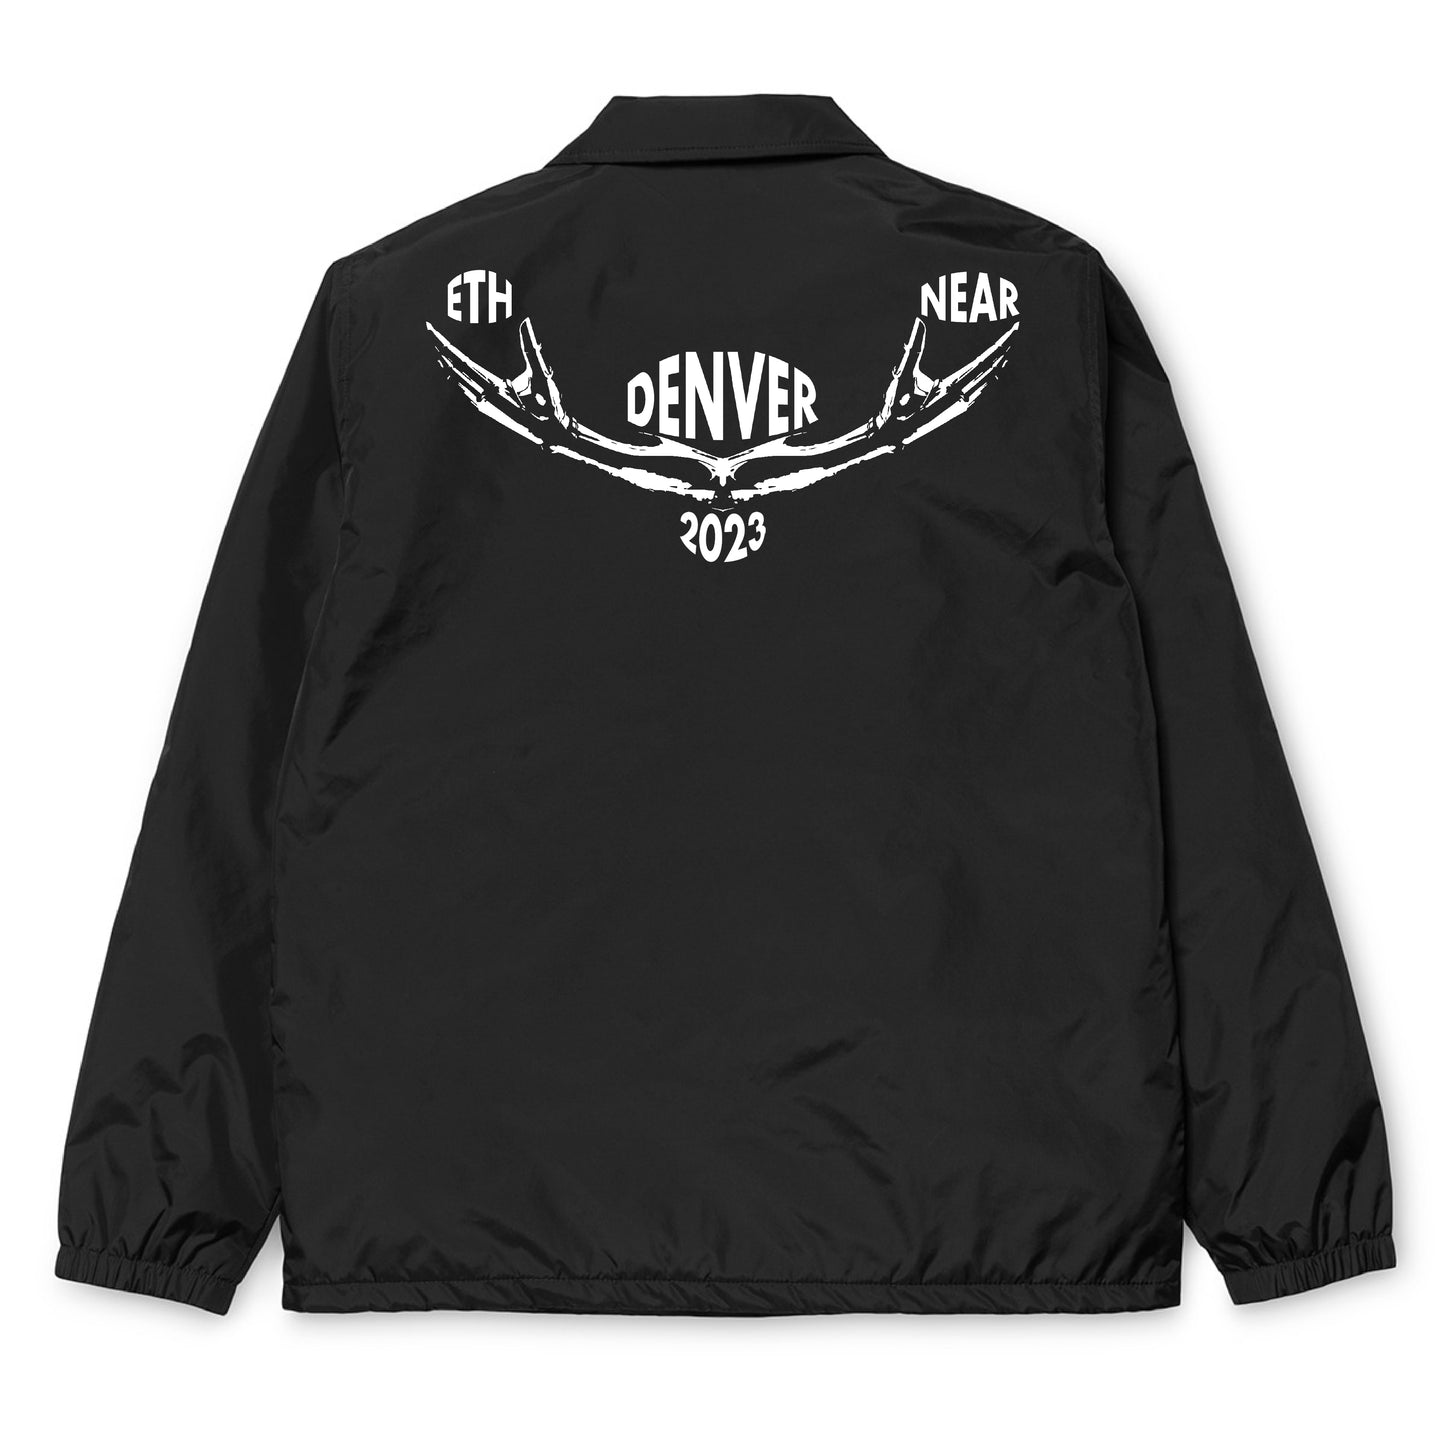 ETH Denver & NEAR Coaches Jacket